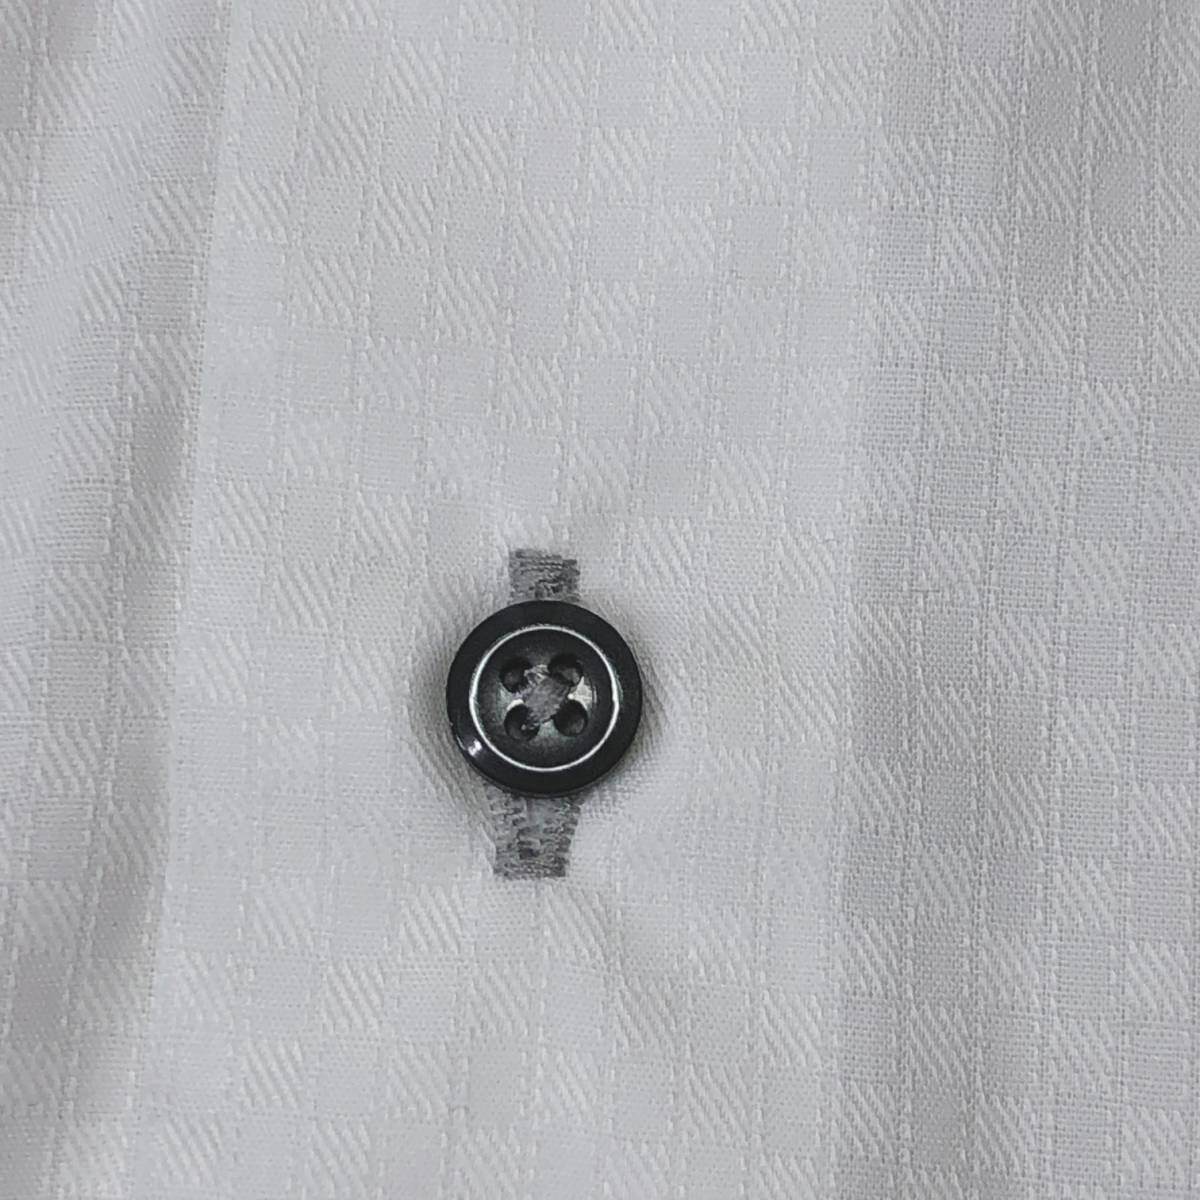 X348 hiromichinakano ヒロミチナカノ メンズ トップス シャツ 半袖 ホワイト 白 綿素材含 シンプル 上品 オフィススタイリッシュルックの画像9